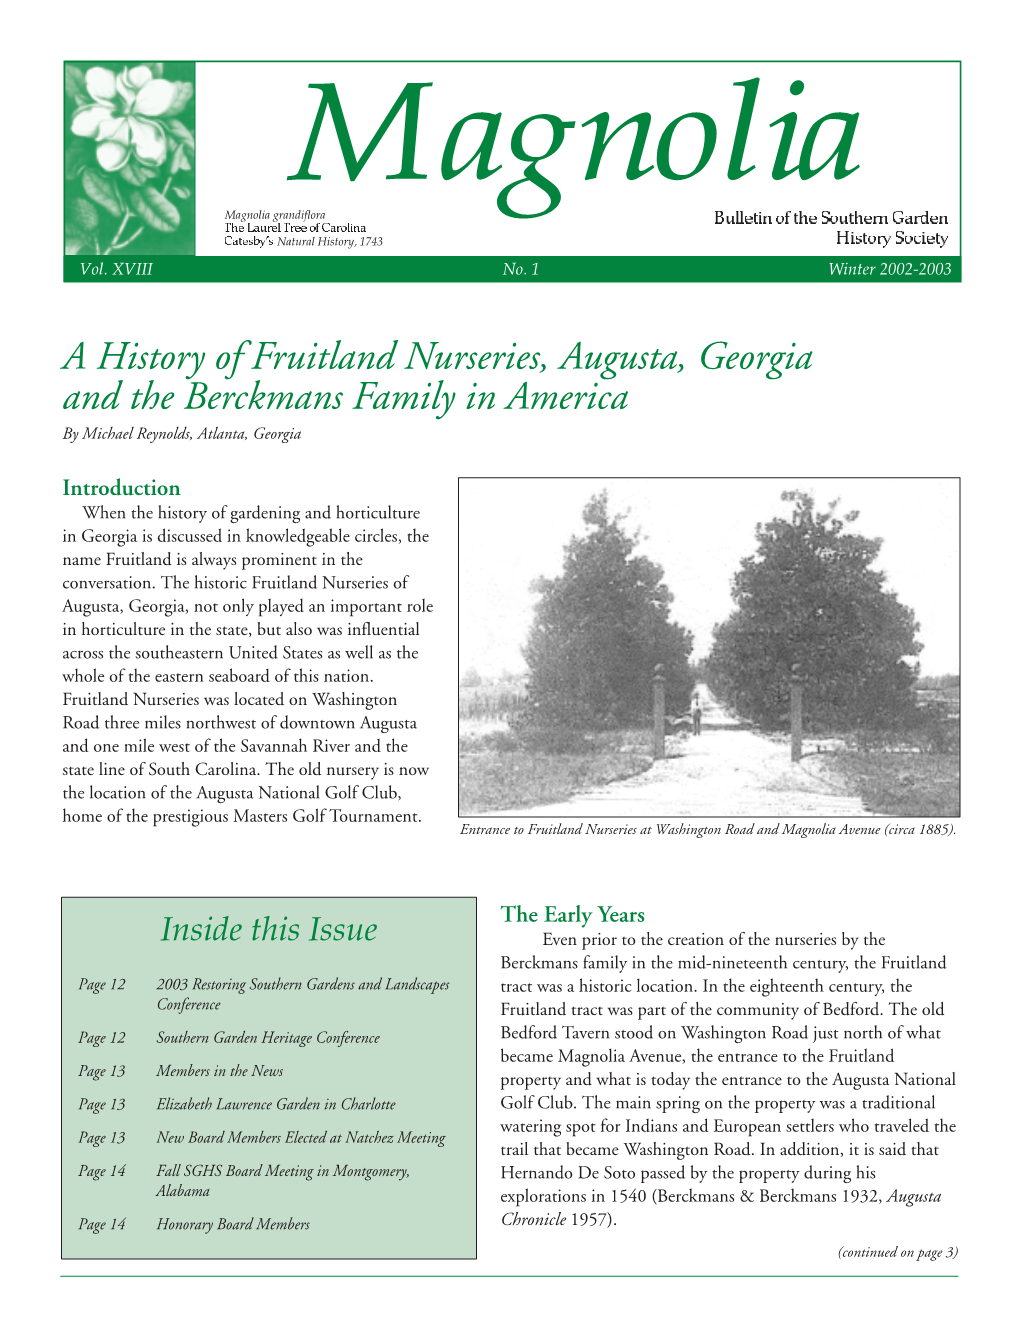 Magnolia Newsletter 10/02